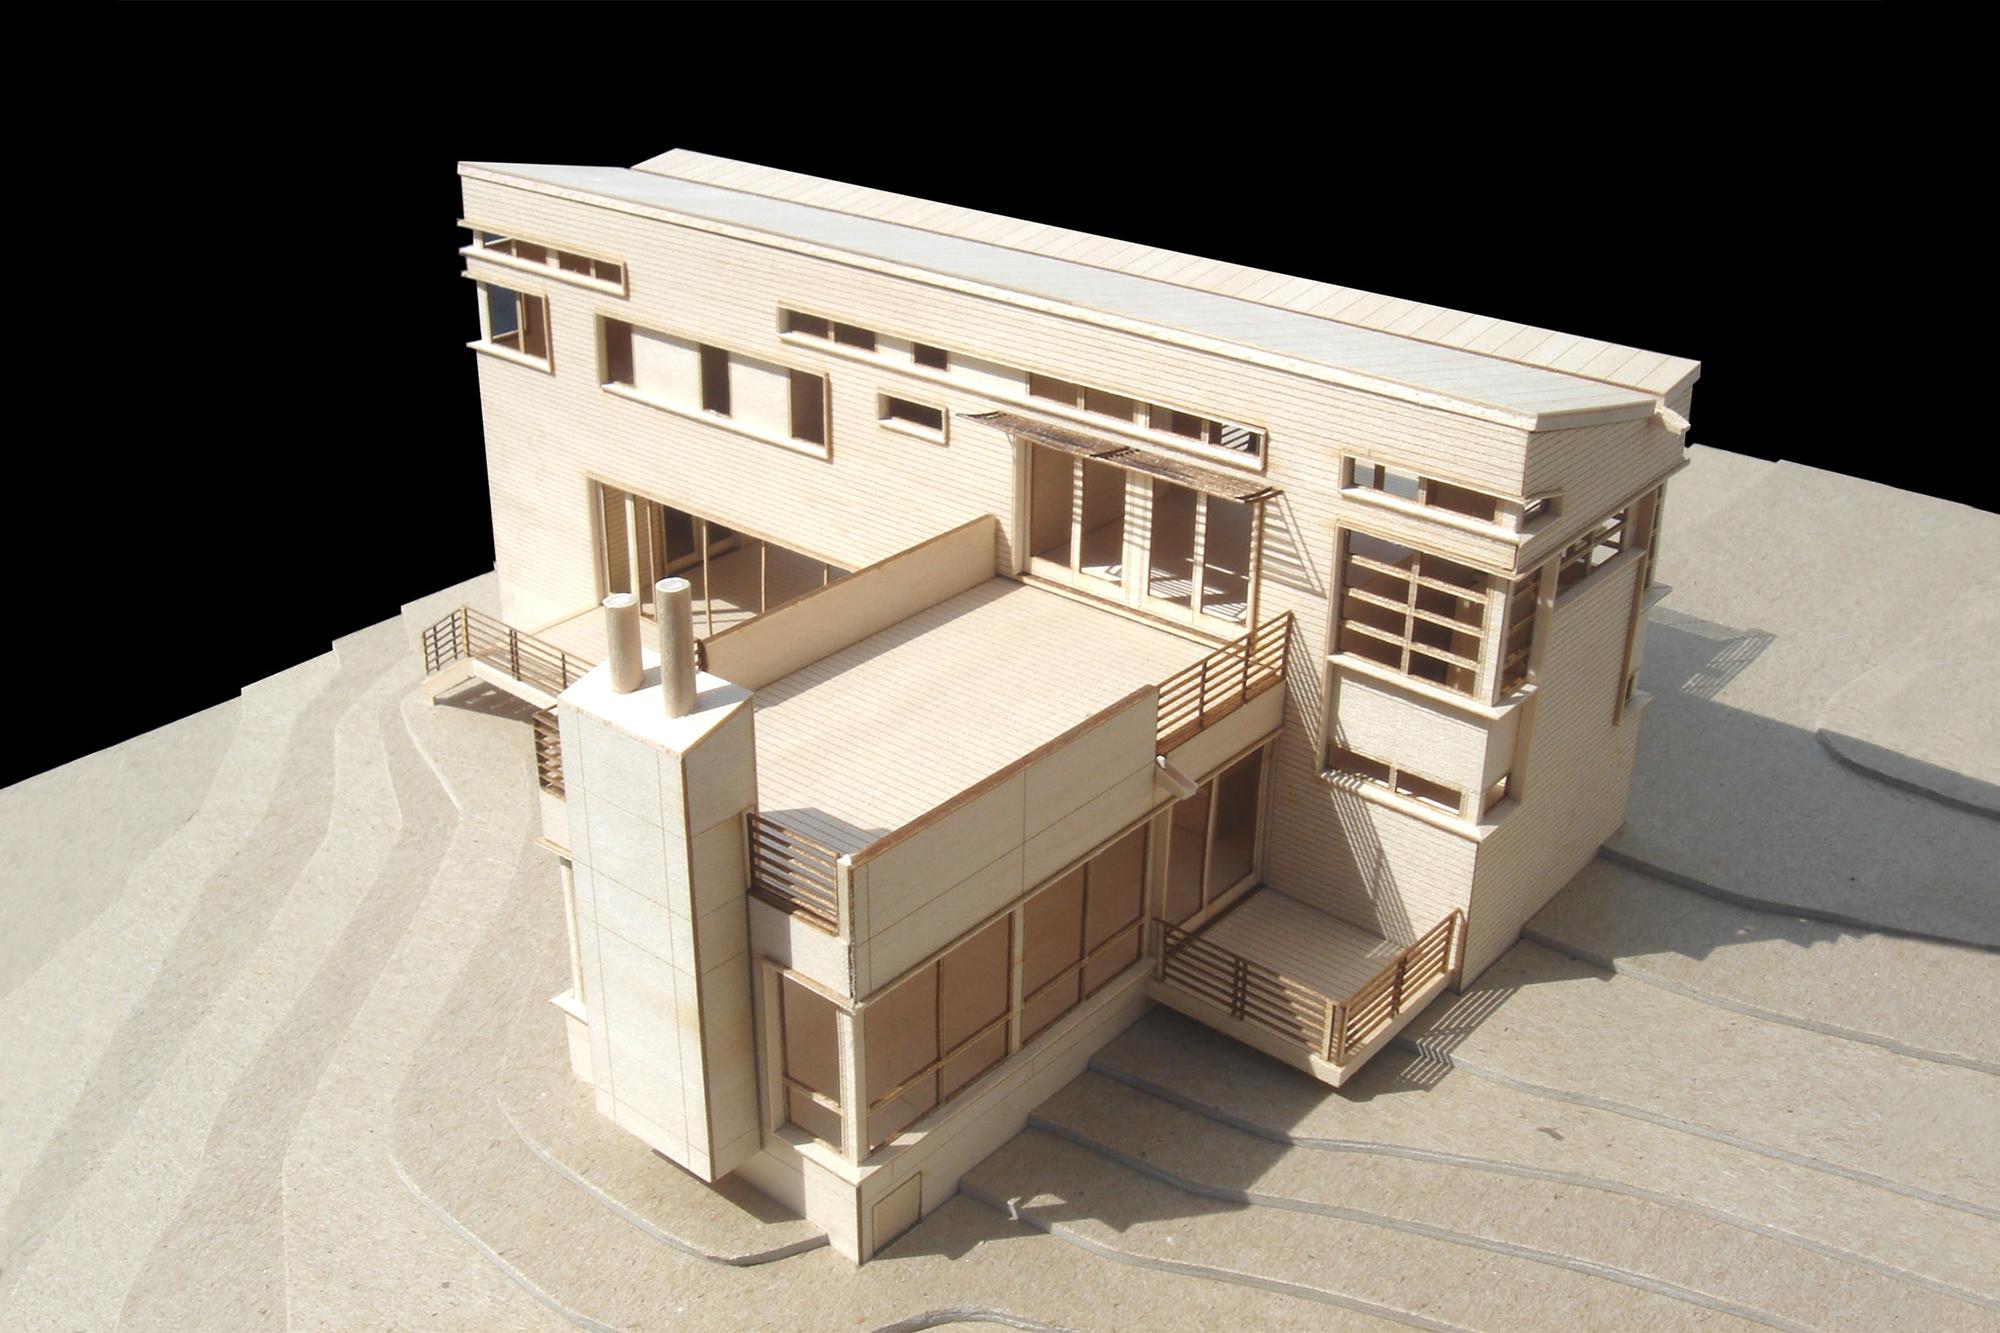 res4-resolution-4-architecture-berkshire house-model-02.jpg